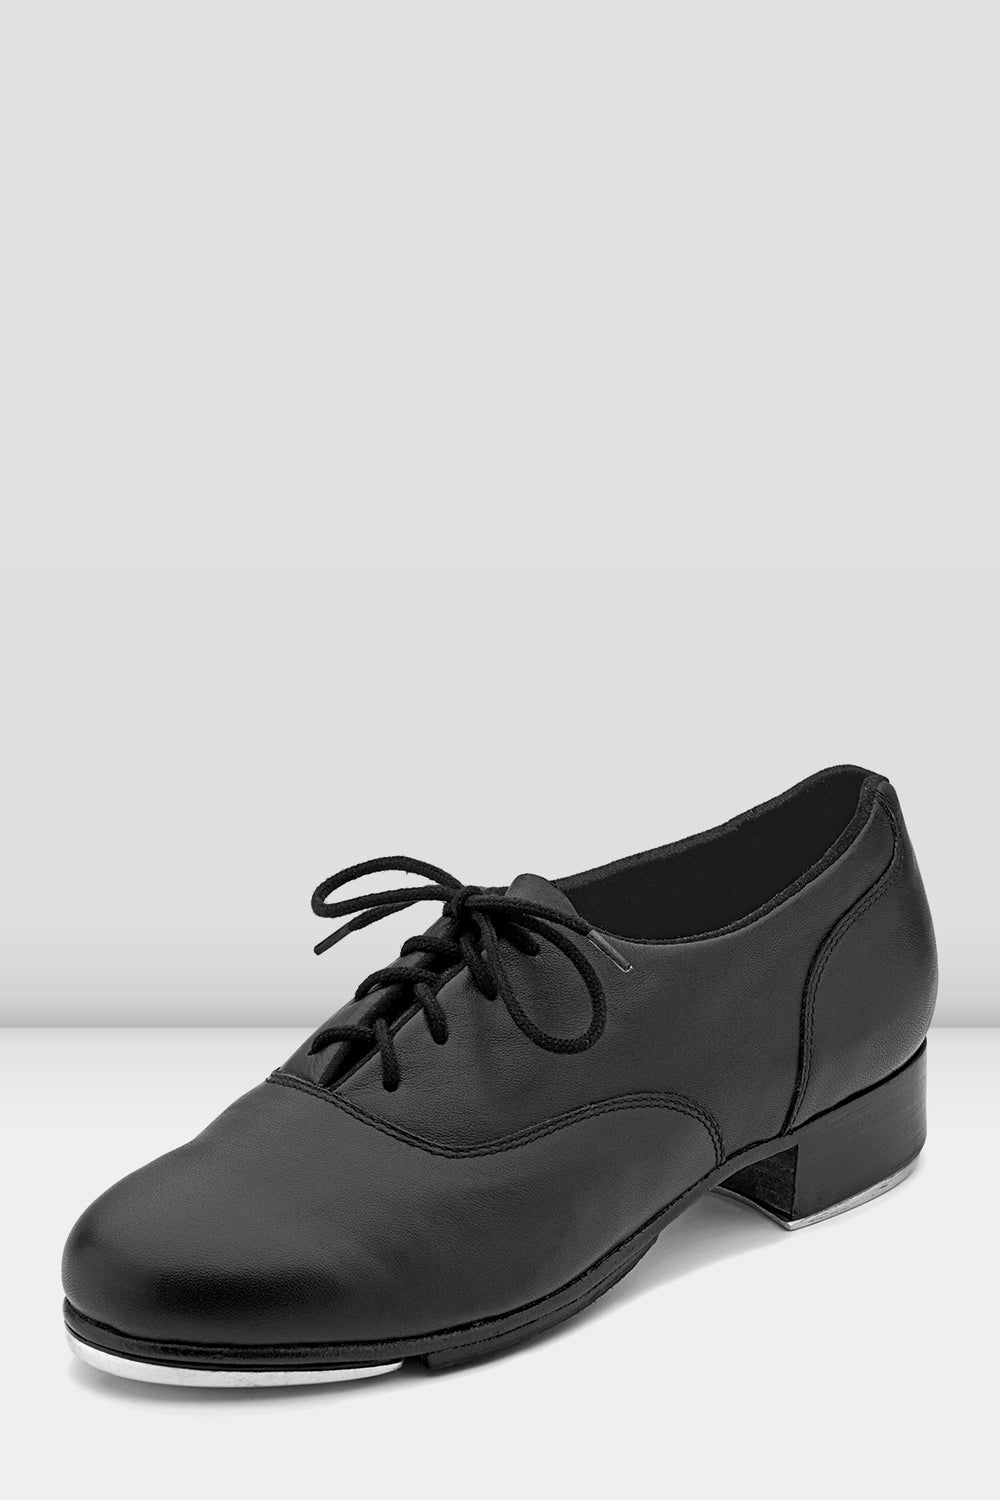 Amazon.com | BeiBestCoat Beginner Tap Dance Shoe-Jazz Tap Dacncing Shoes  for Girls,Boys(Toddler,Little Kid) (1k) Black | Dance